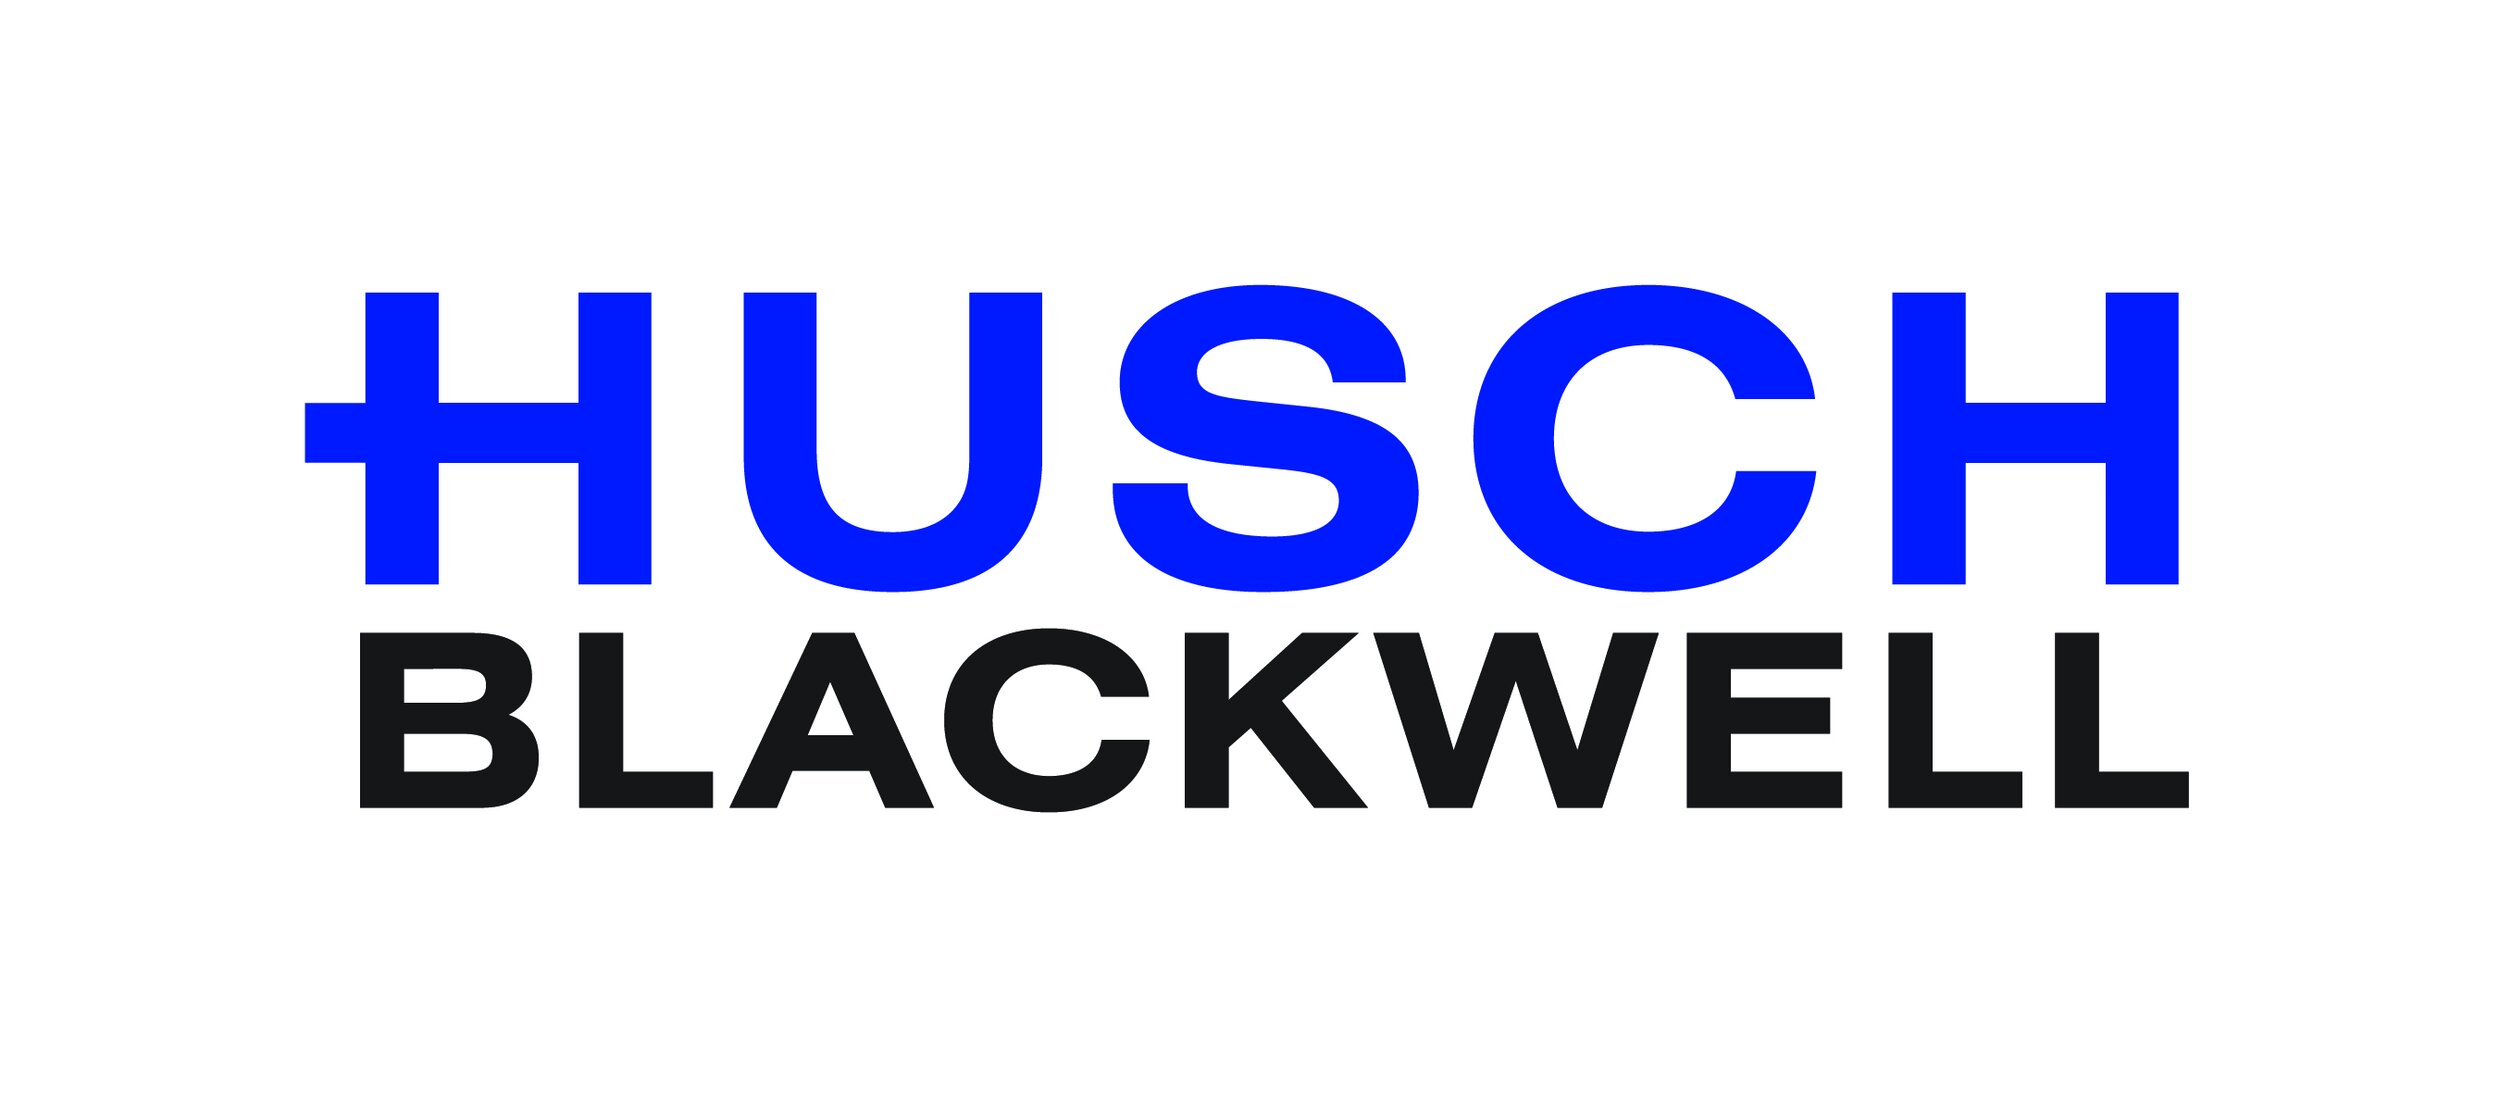 Husch Blackwell logo